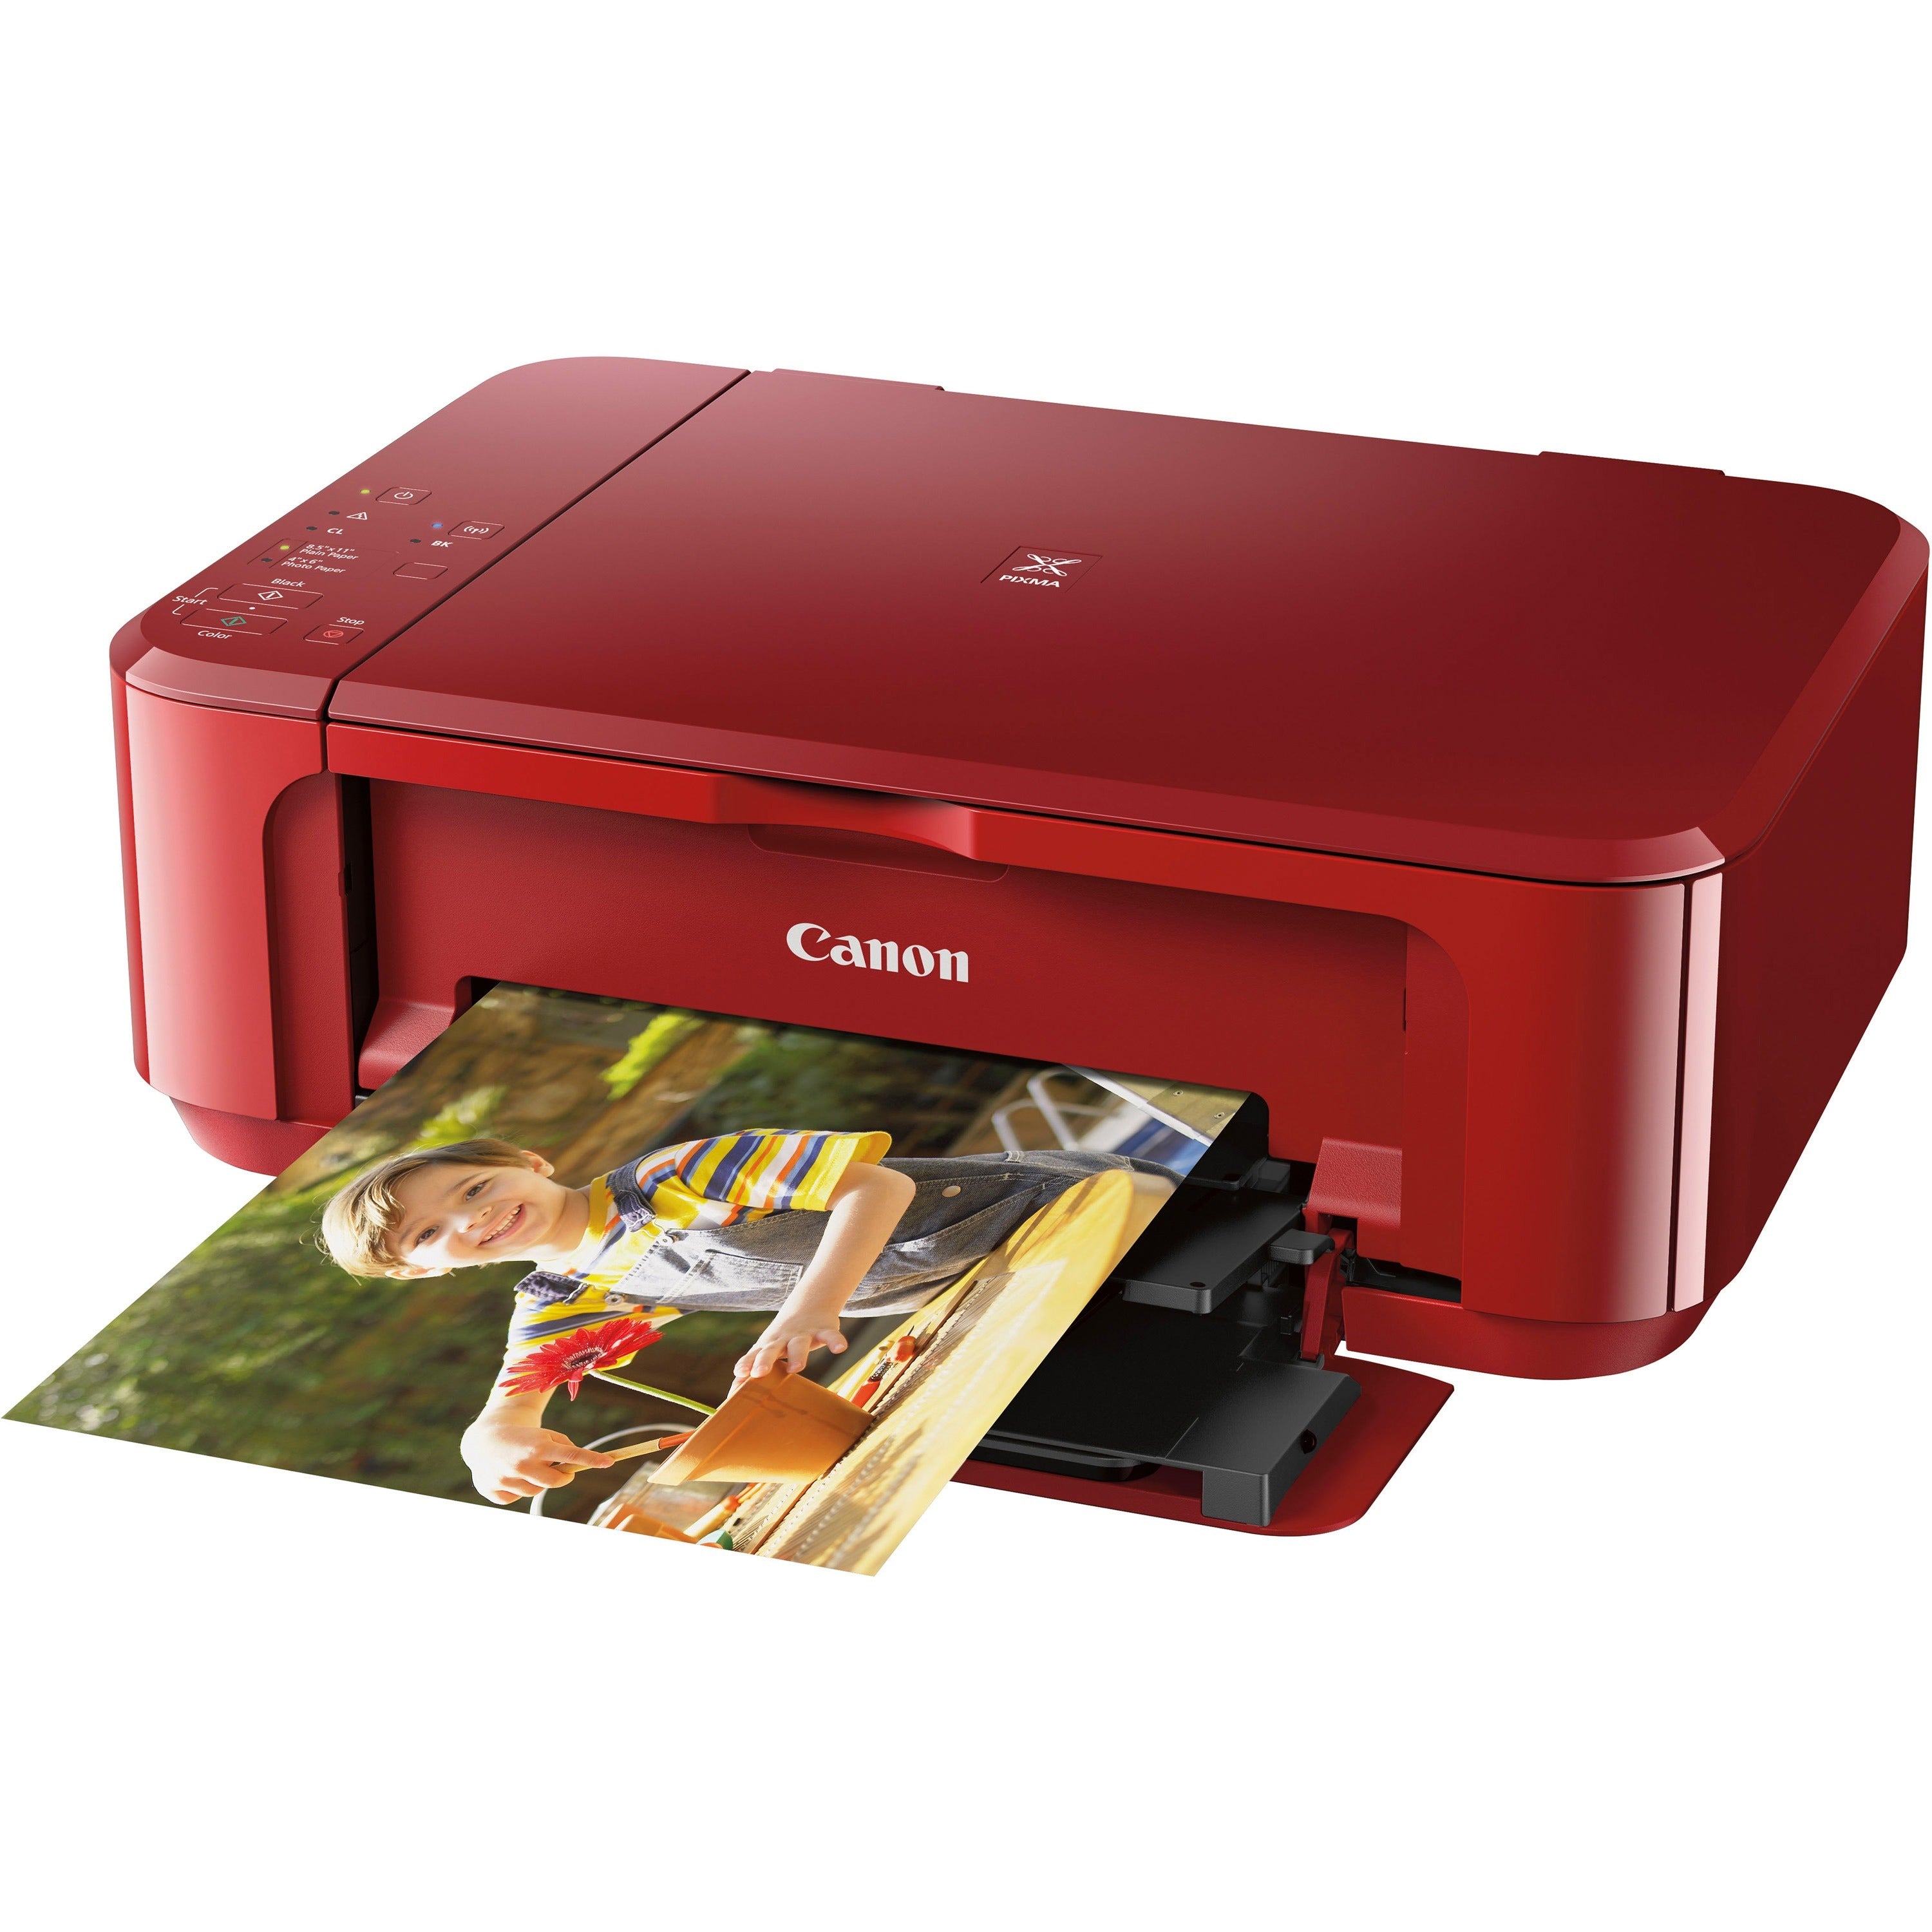 Canon PIXMA MG3620 Wireless Inkjet Multifunction Printer - Color - Red - Copier/Printer/Scanner - 4800 x 1200 dpi Print - Automatic Duplex Print - Color Flatbed Scanner - 1200 dpi Optical Scan - Wireless LAN - Apple AirPrint, Mopria, Wireless PictBri - 1